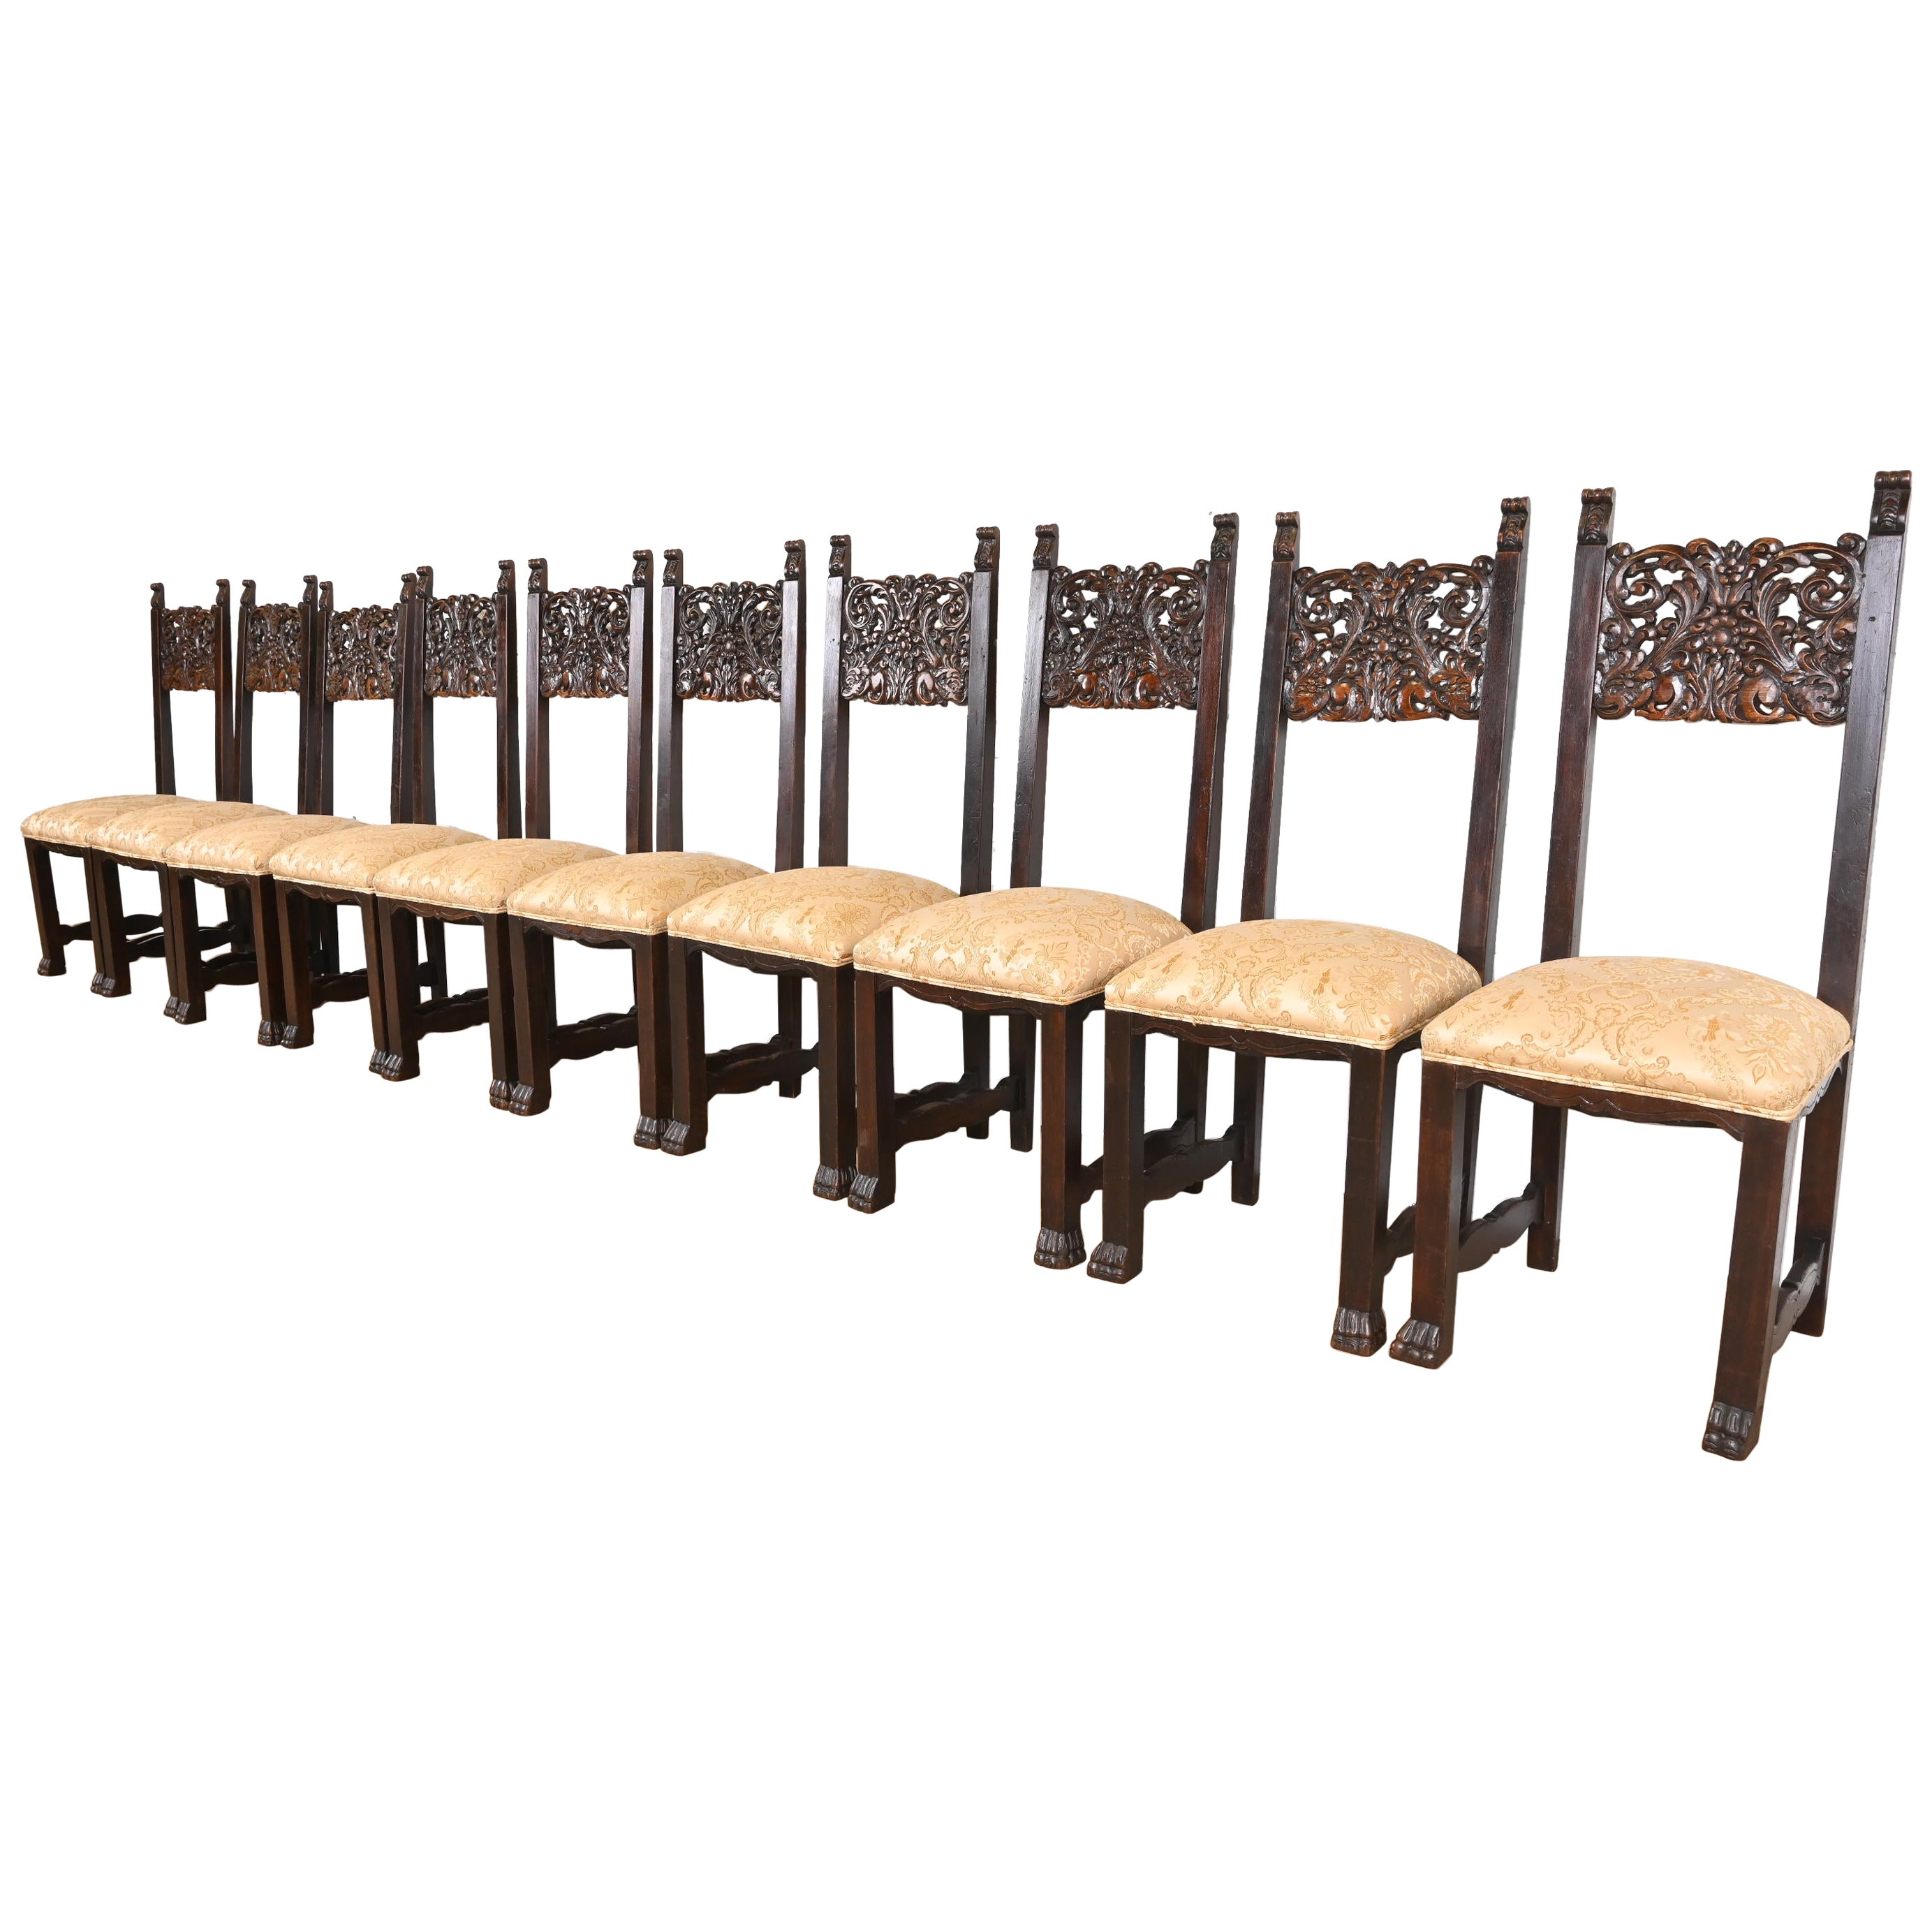 R.J. Horner Victorian Ornate Carved Oak High Back Dining Chairs, Set of Ten For Sale